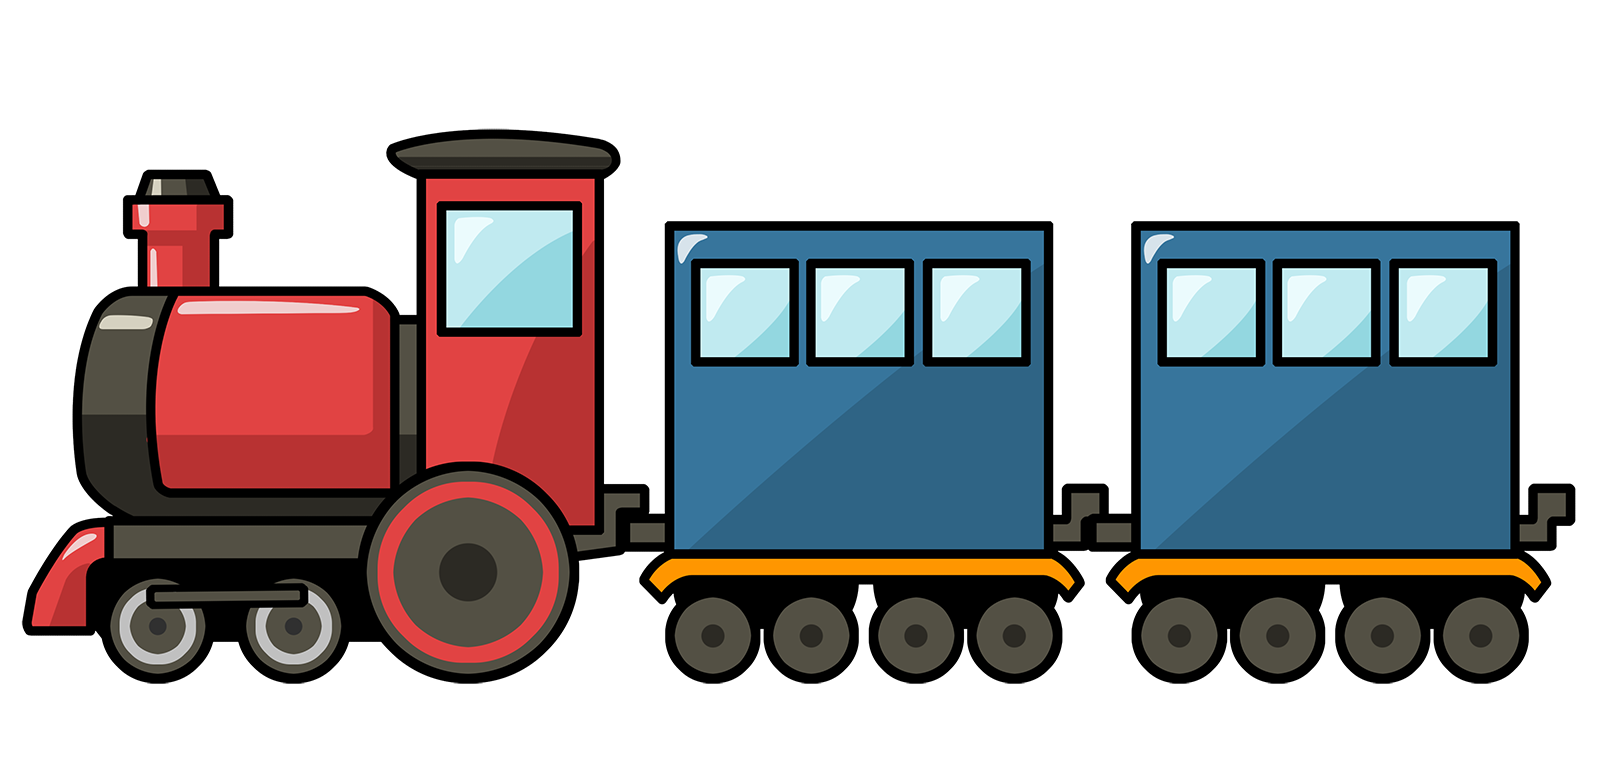 Steam train animated clipart